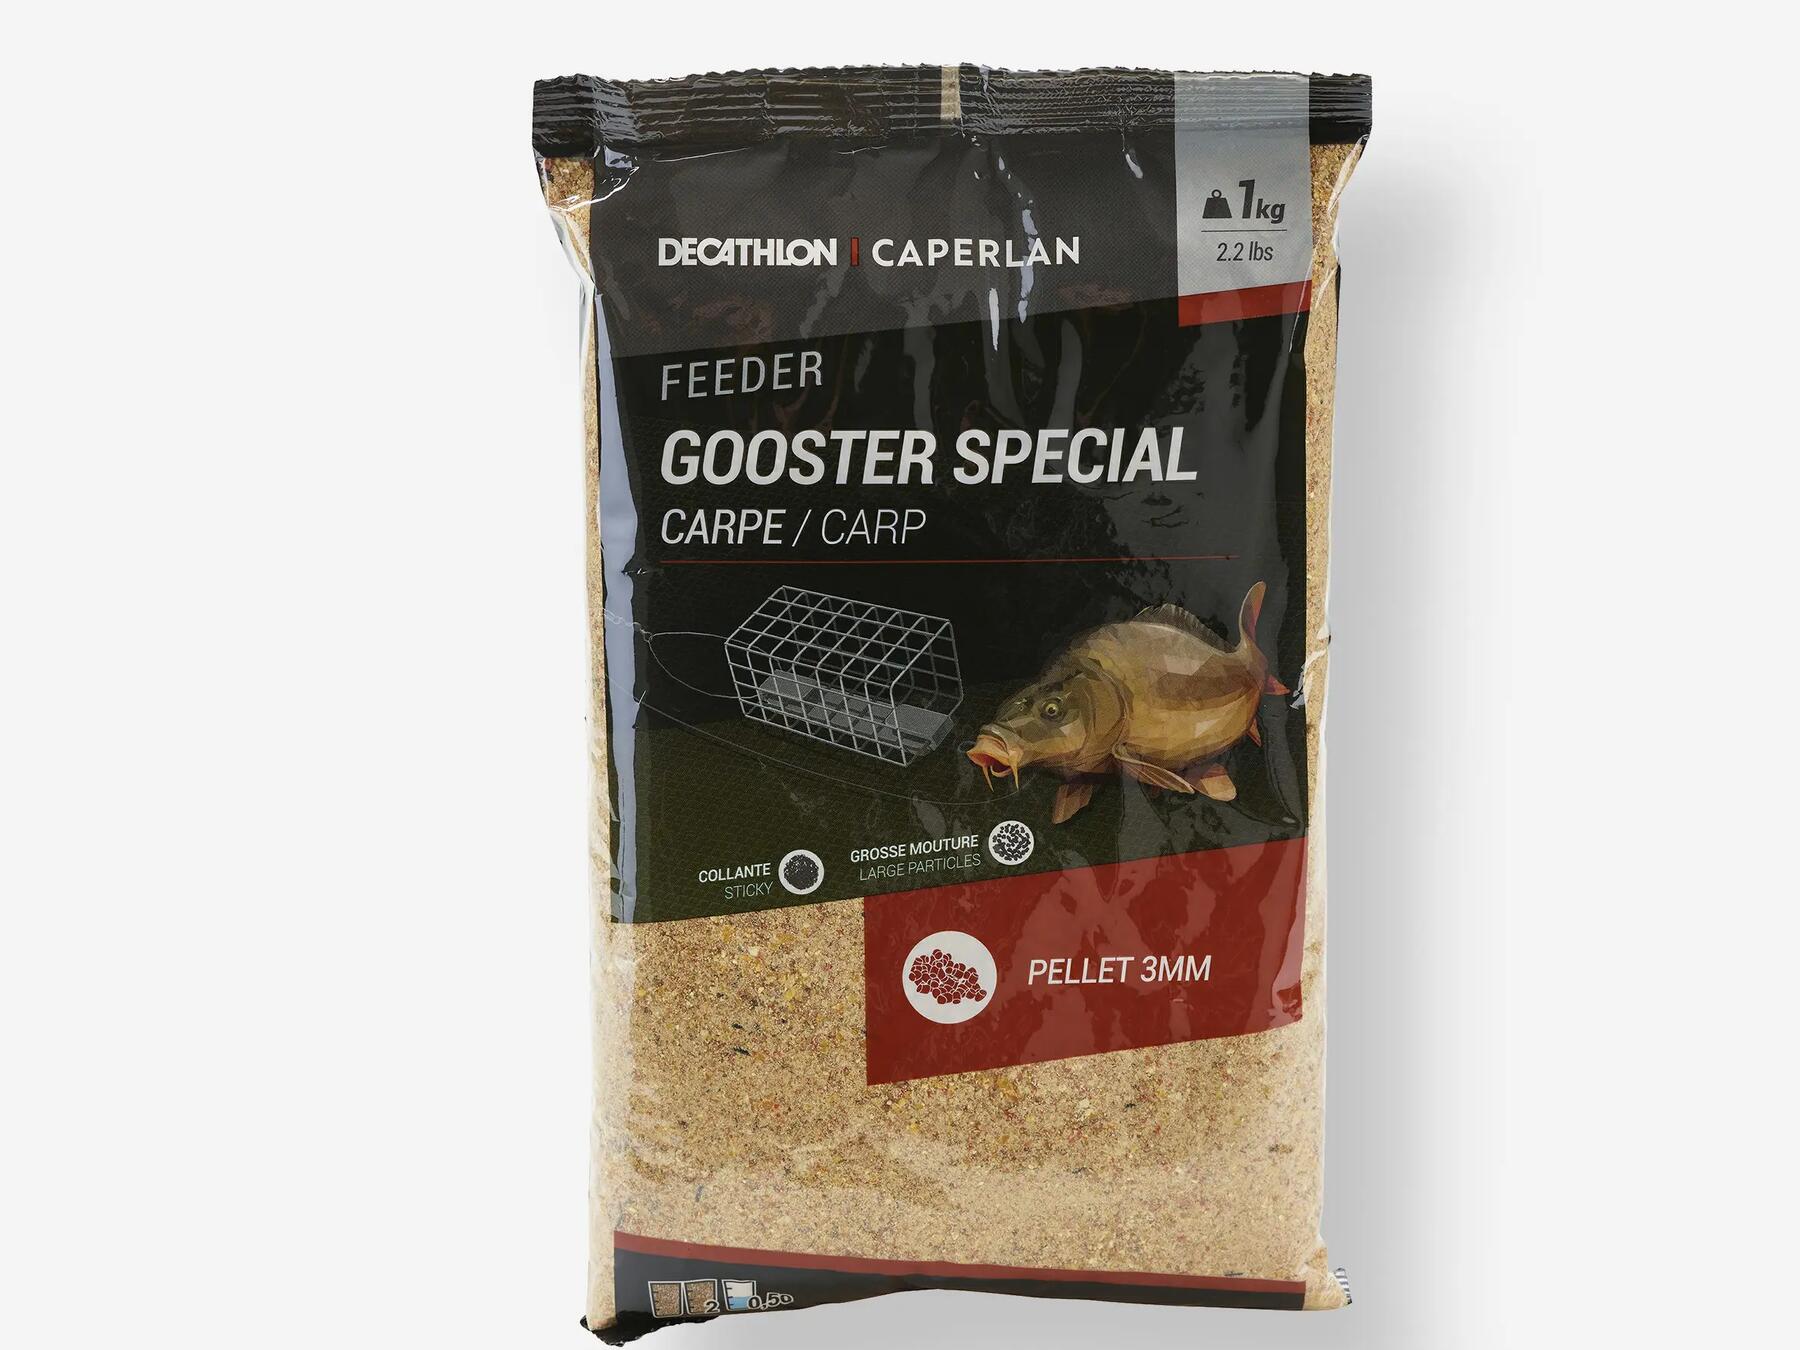 engodo gooster special feeder